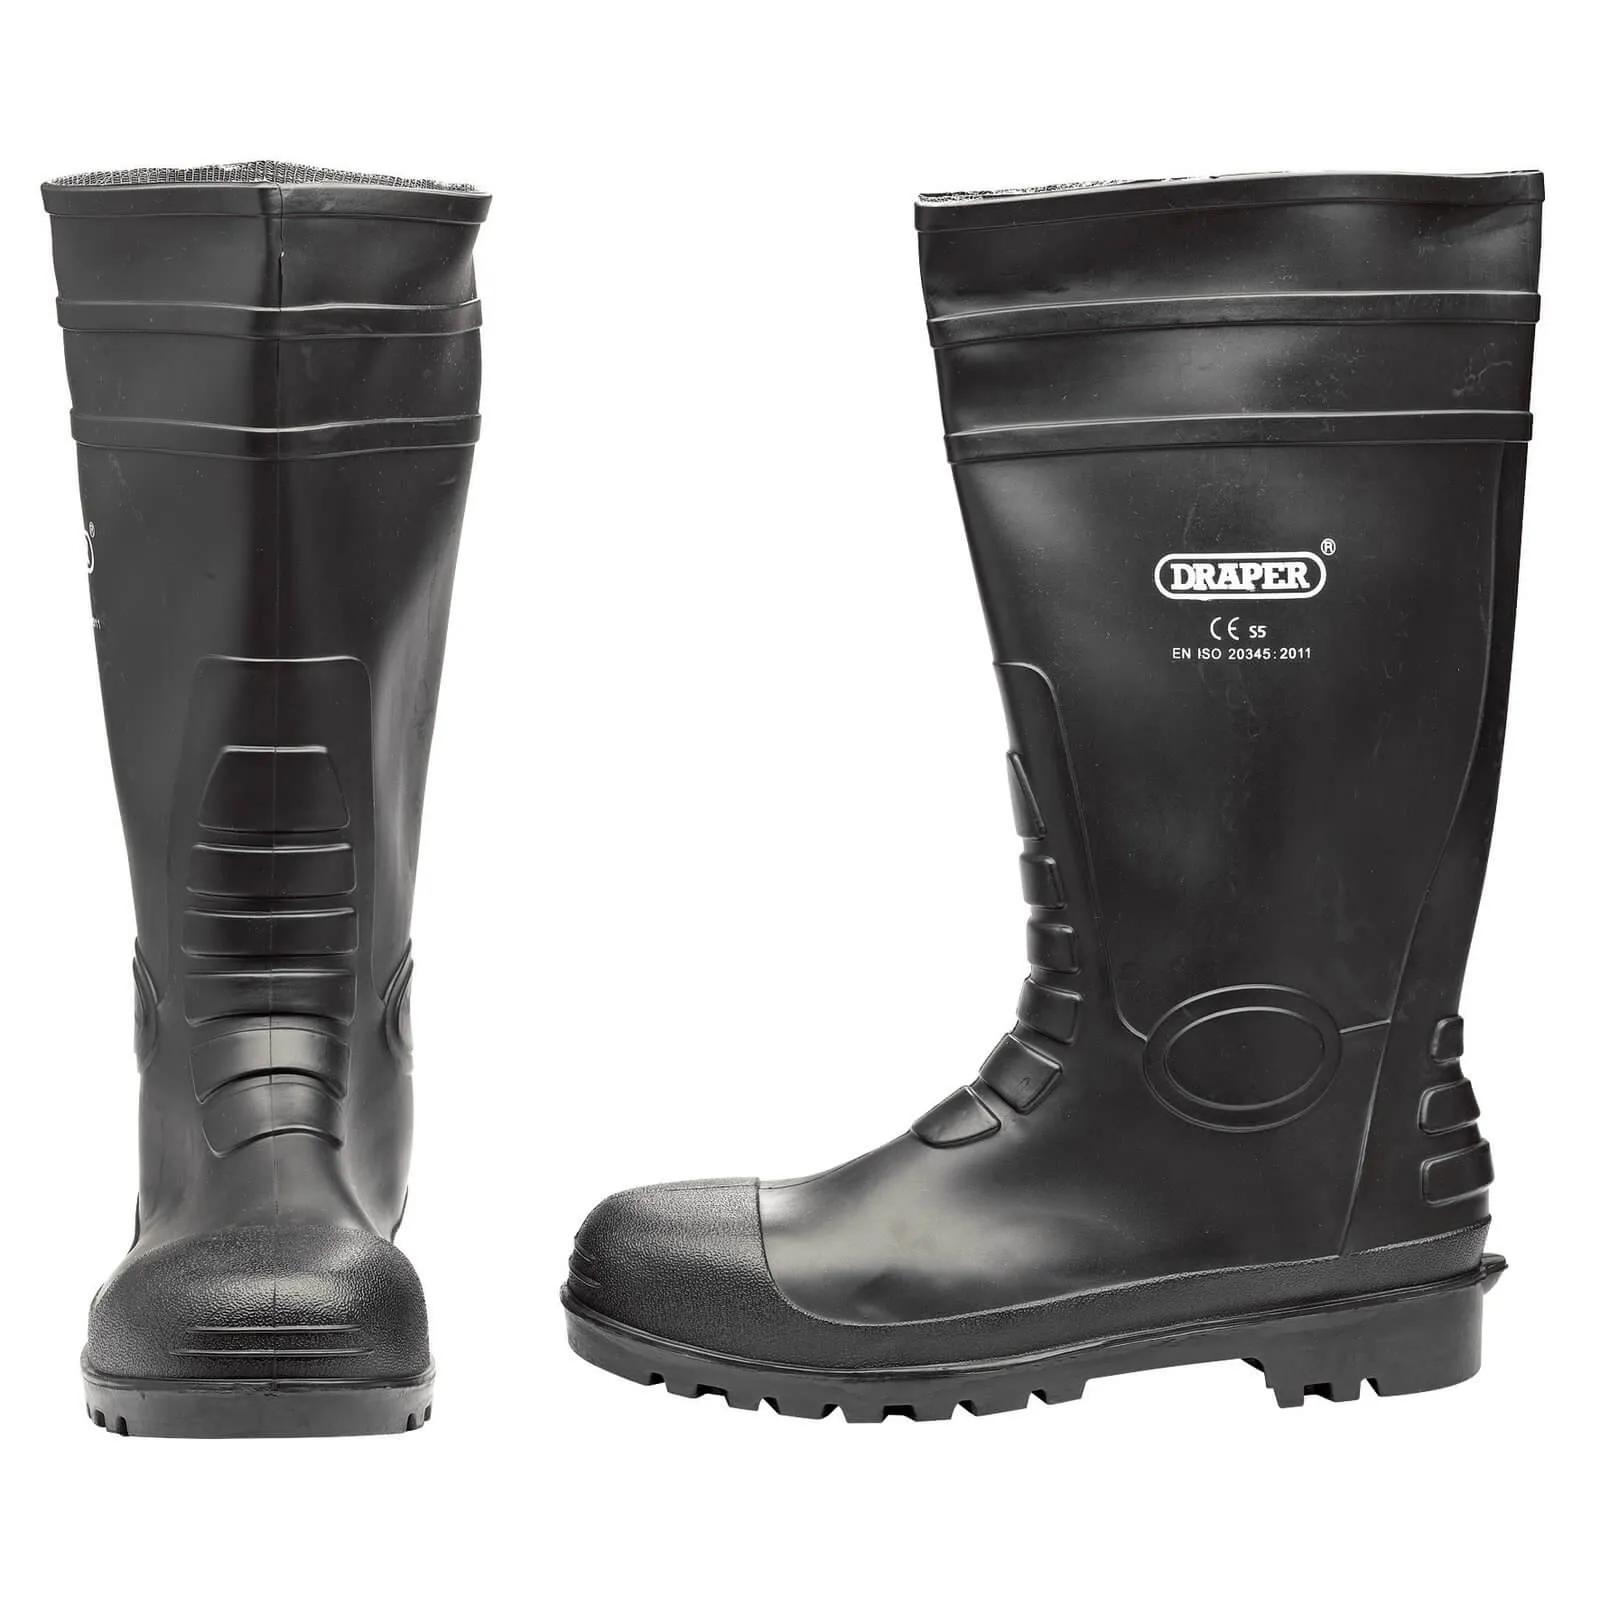 Draper Safety Wellington Boots - Black, Size 7